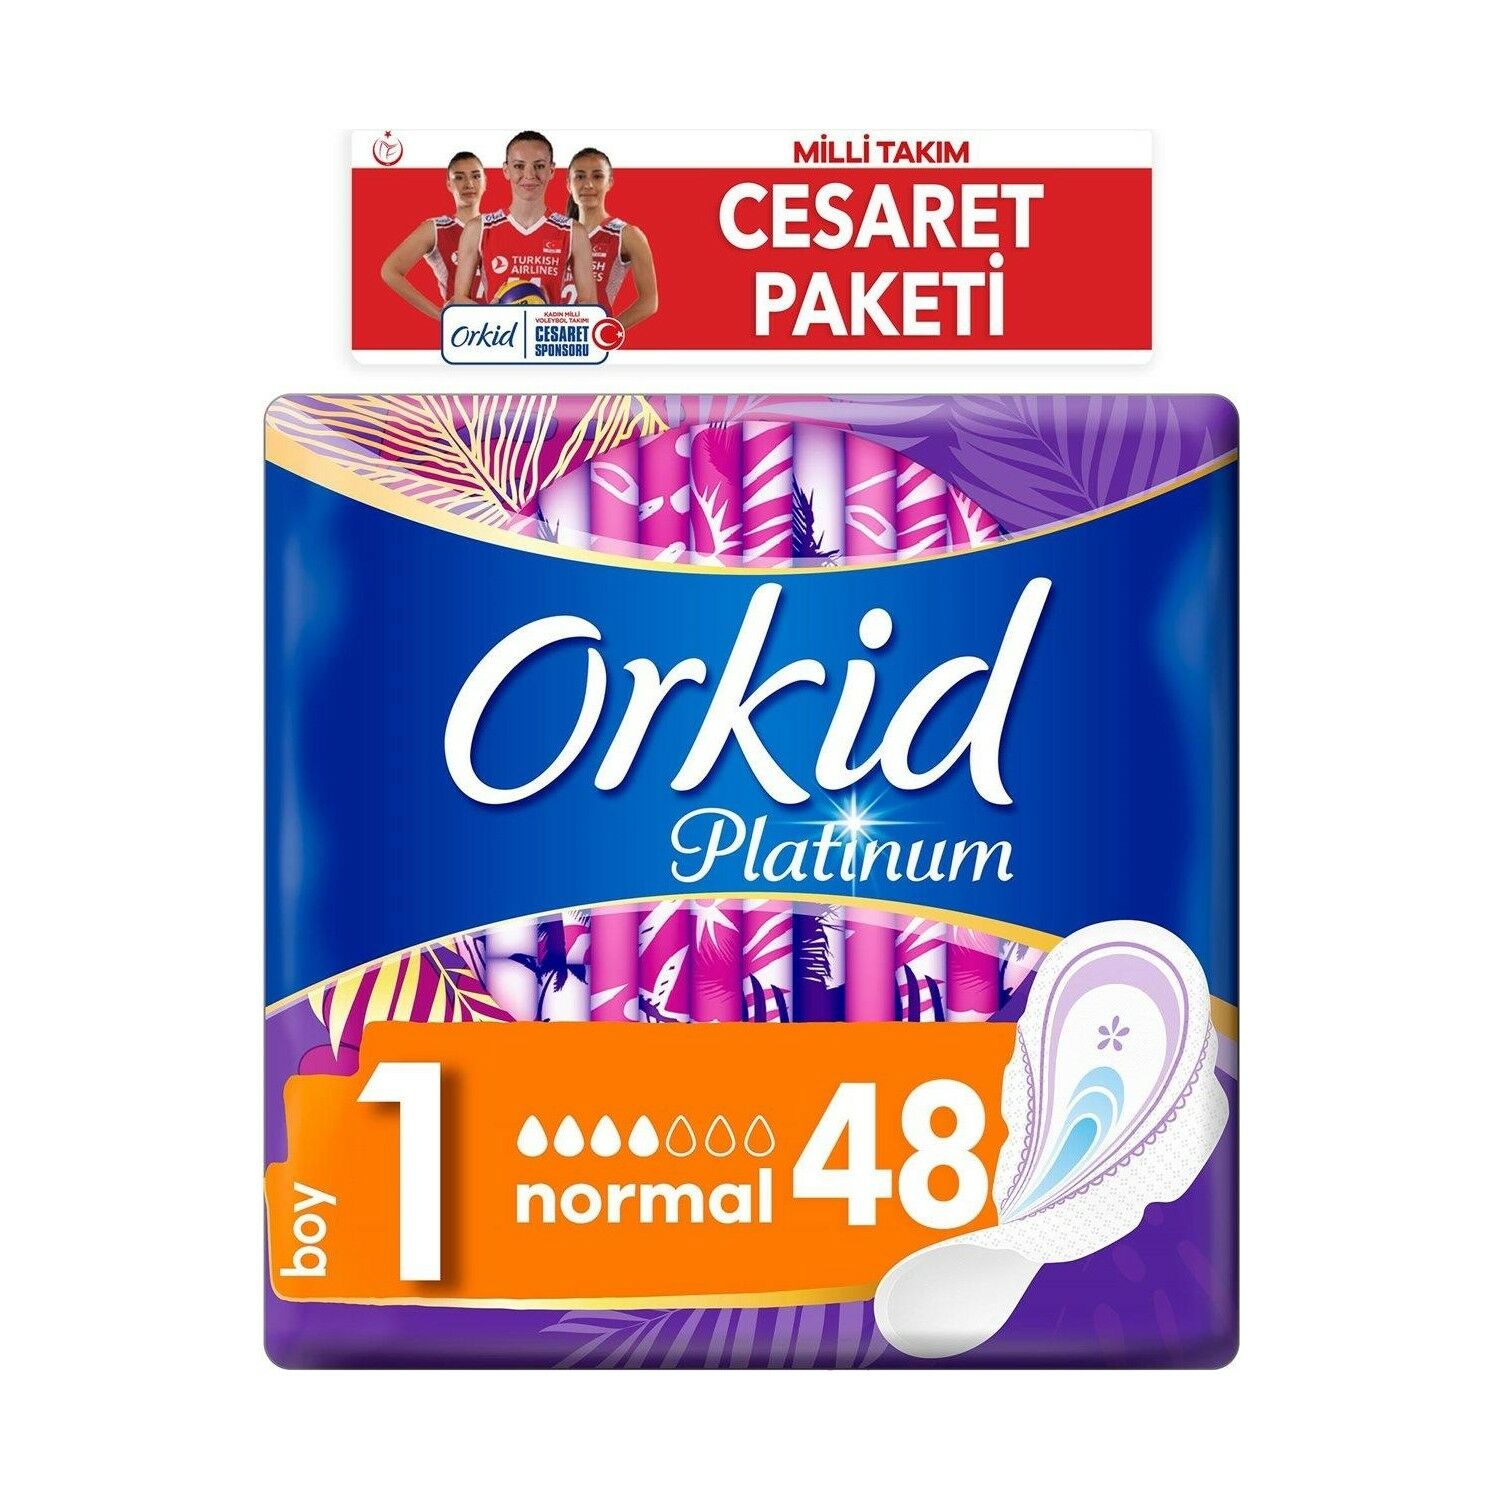 Orkid Ultra Platinum 48'li Normal Cesaret Paketi